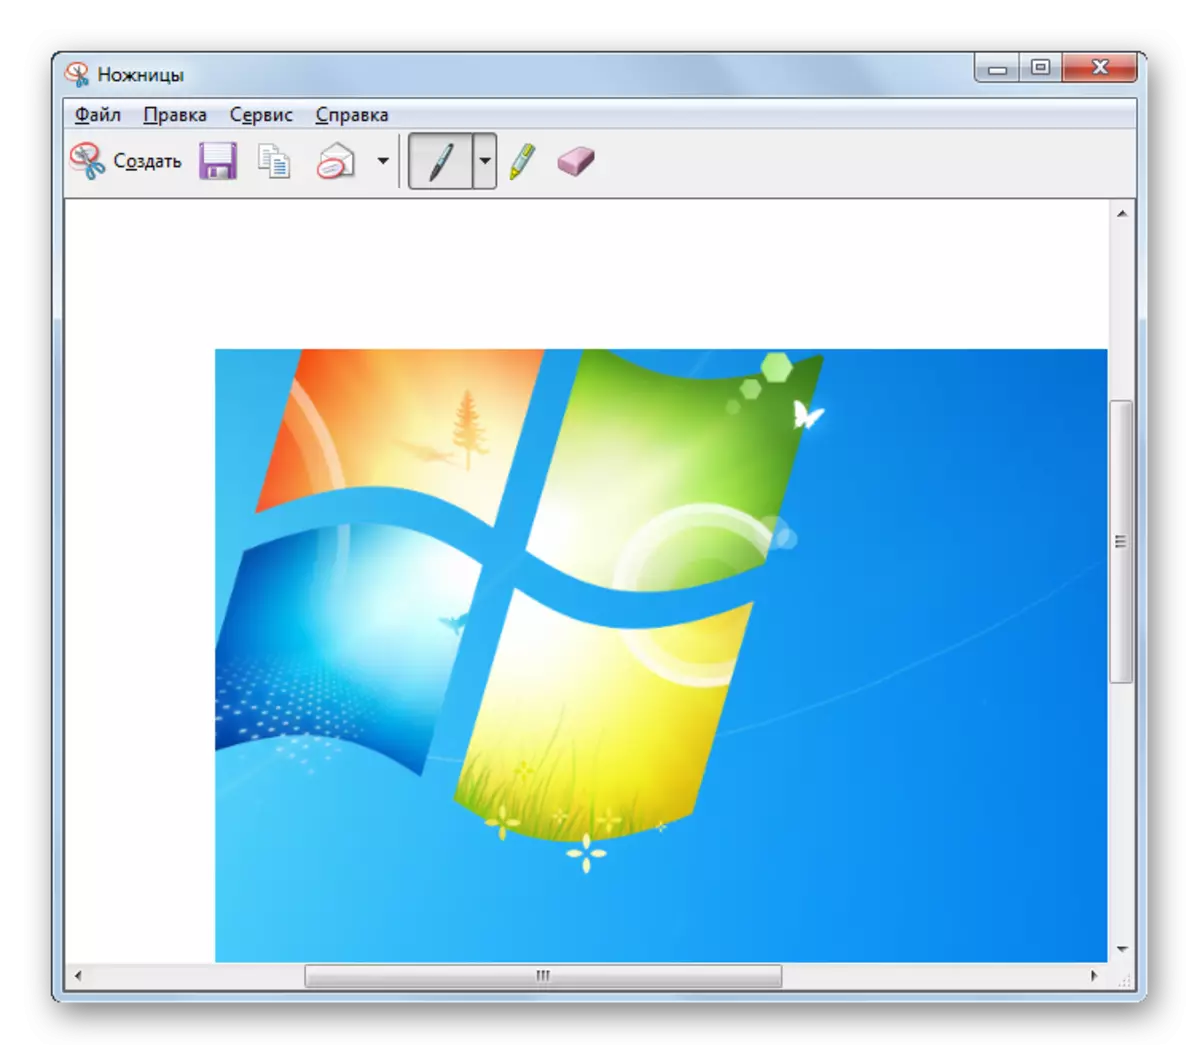 Štandardné nožnice v systéme Windows 7